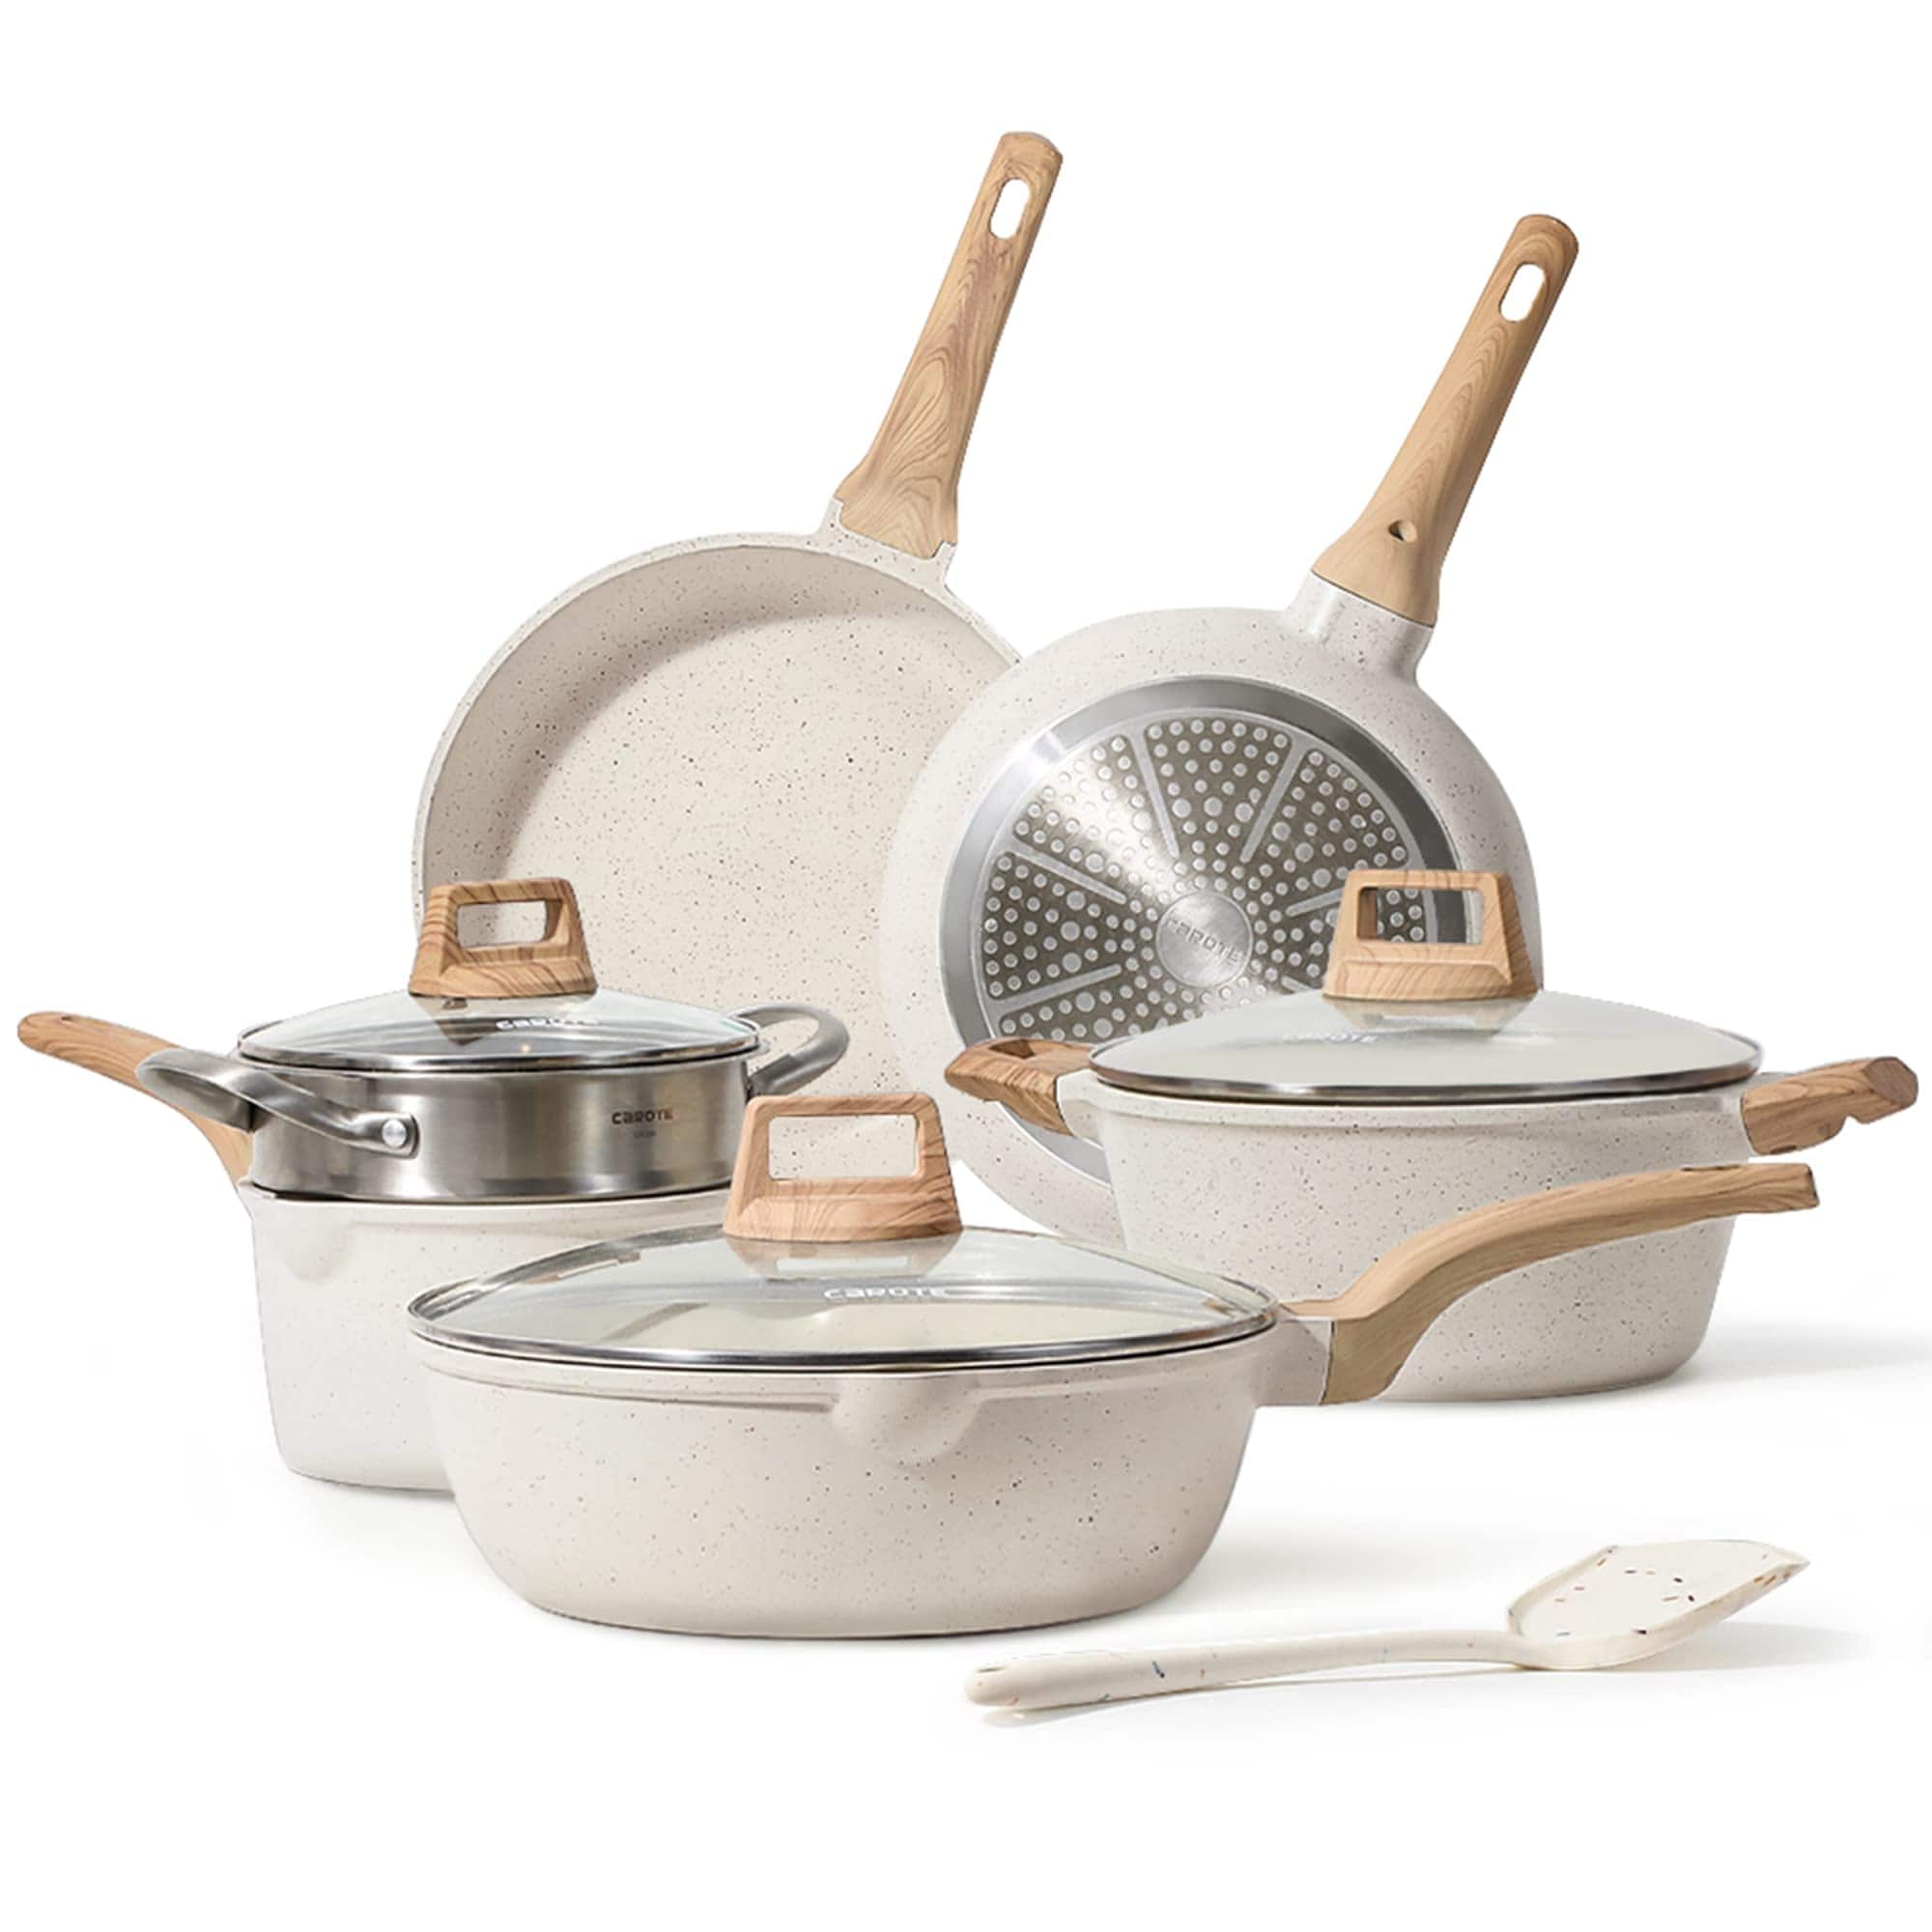 https://ak1.ostkcdn.com/images/products/is/images/direct/88e60de0a55933d879b66205f1a34163442f39b0/Pots-and-Pans-Set-Nonstick%2C-White-Granite-Induction-Kitchen-Cookware-Sets%2C-10-Pcs-Non-Stick-Cooking-Set-w-Frying-Pans-Saucepans.jpg